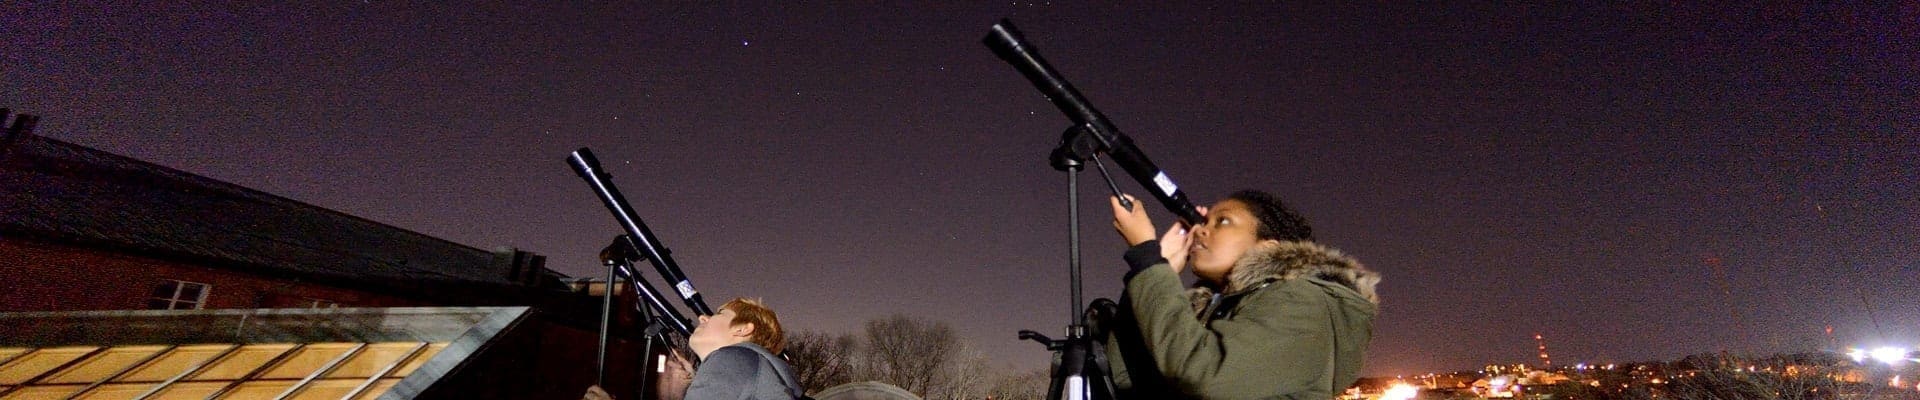 students using telescopes